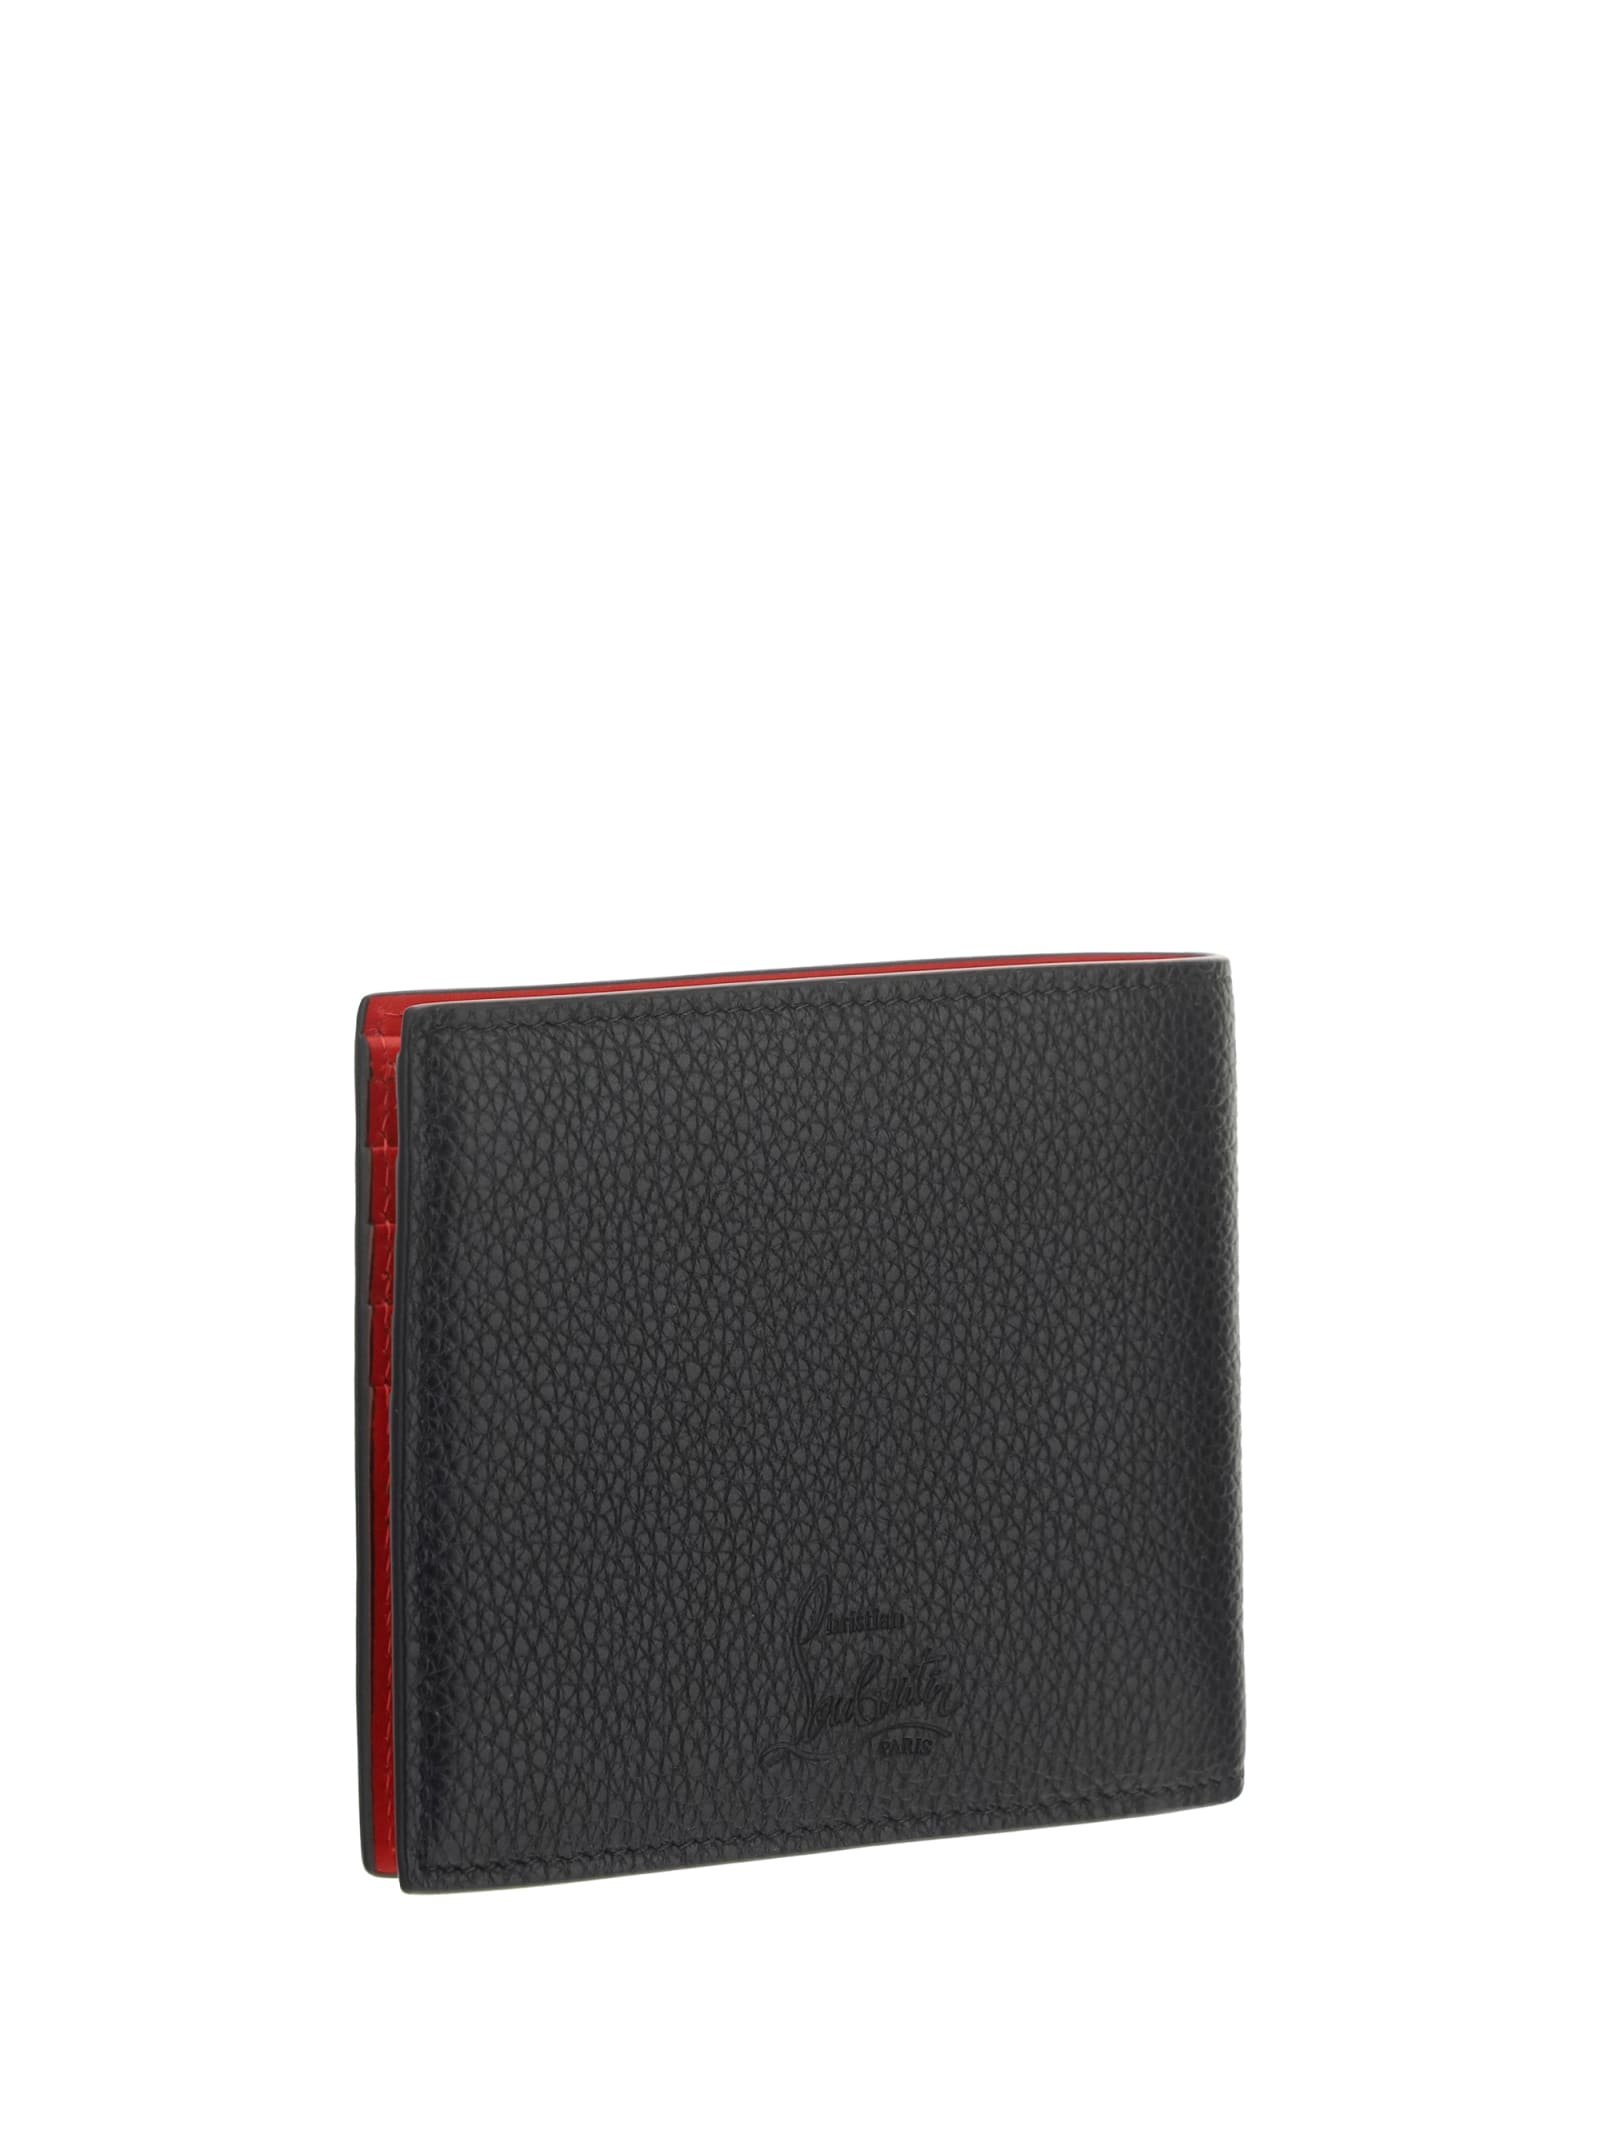 Shop Christian Louboutin Coolcard Wallet In Black/gun Metal